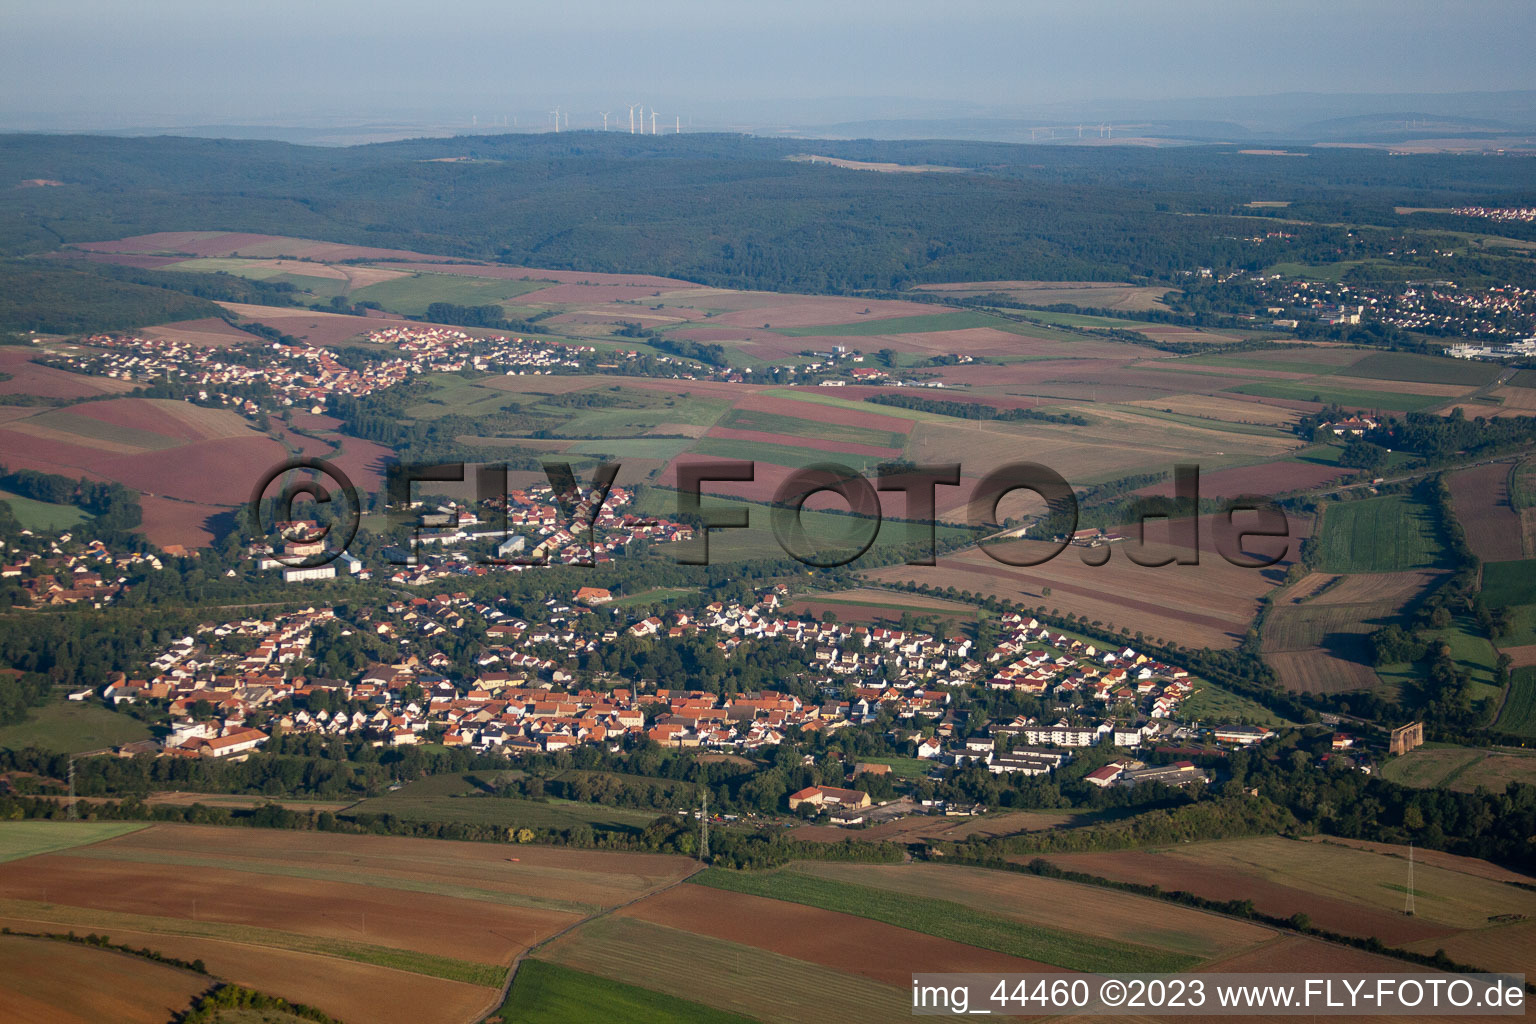 Marnheim in the state Rhineland-Palatinate, Germany